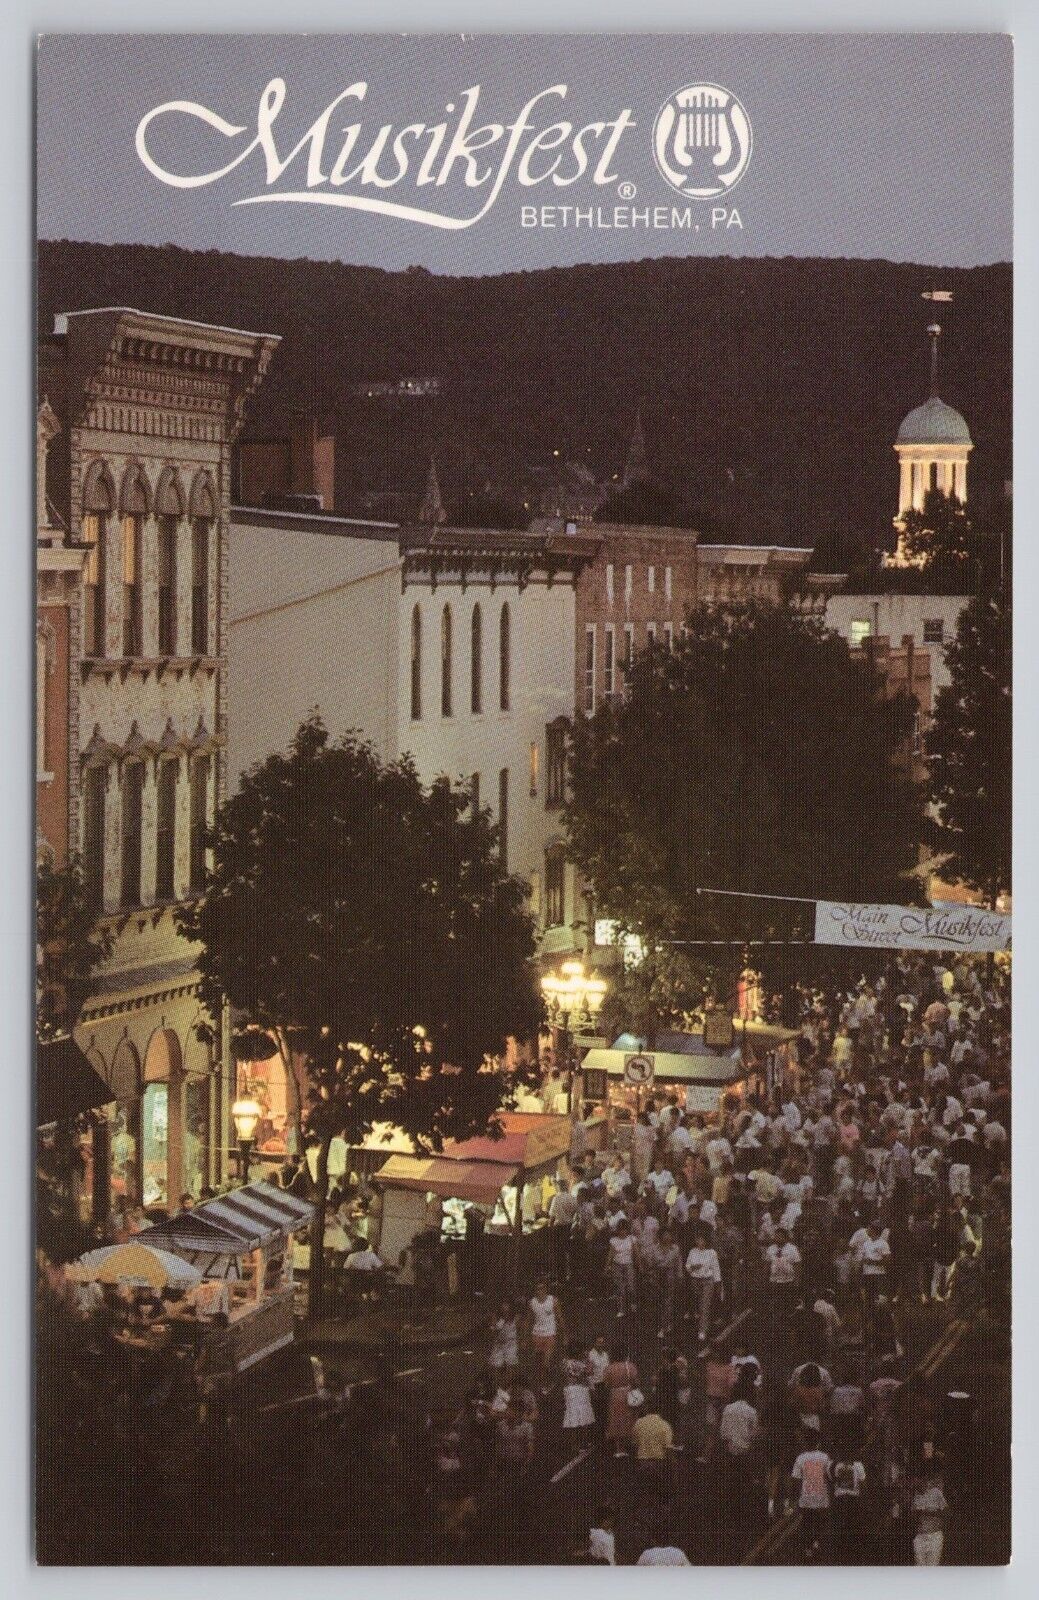 Bethlehem Pennsylvania, Musikfest Arts Festival Advertising, Vintage Postcard